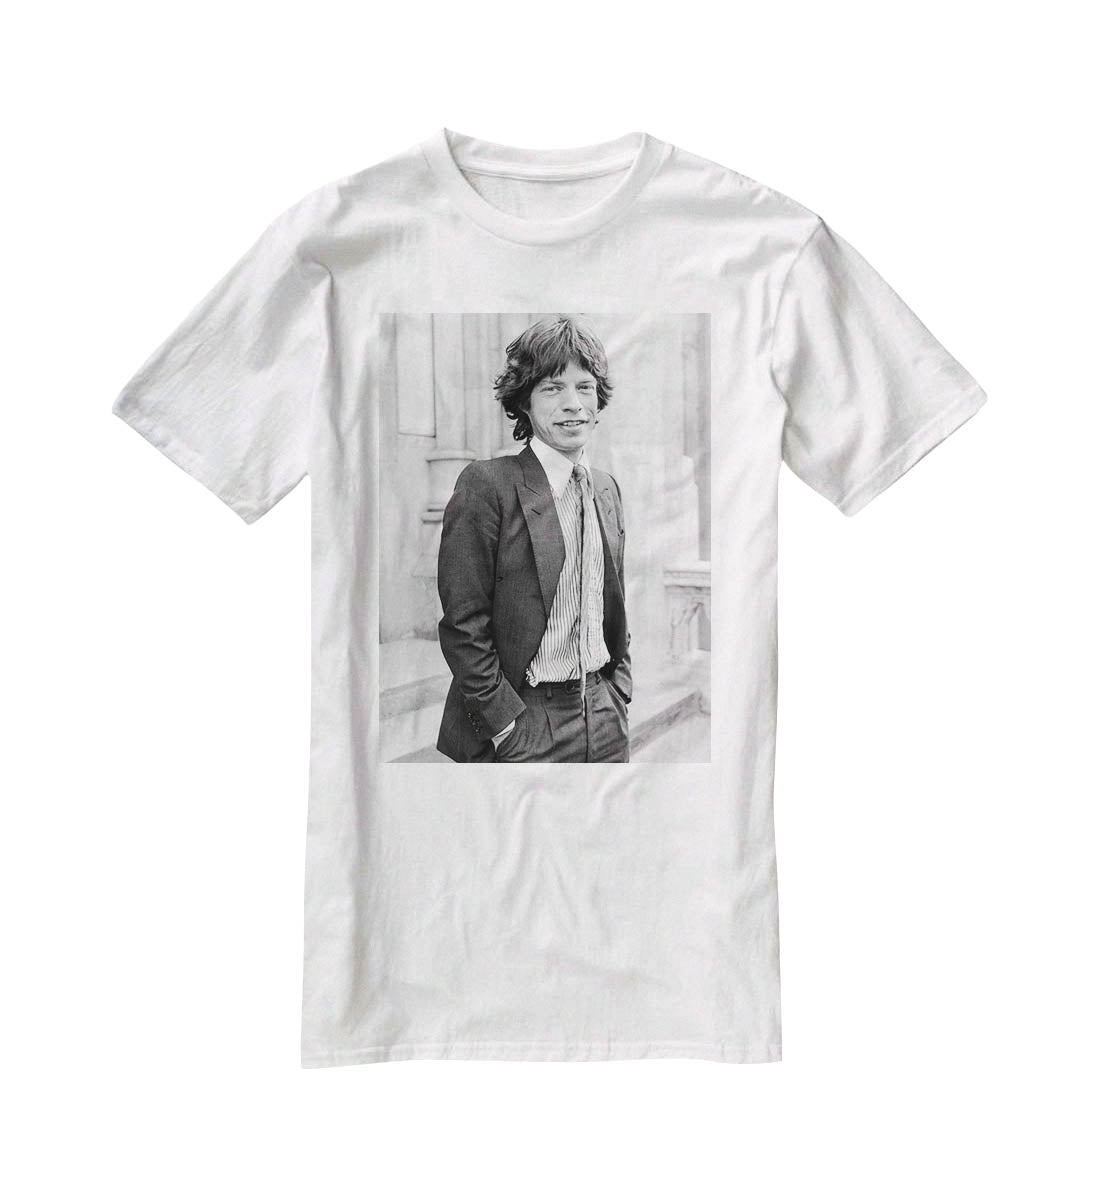 Mick Jagger in a tie T-Shirt - Canvas Art Rocks - 5